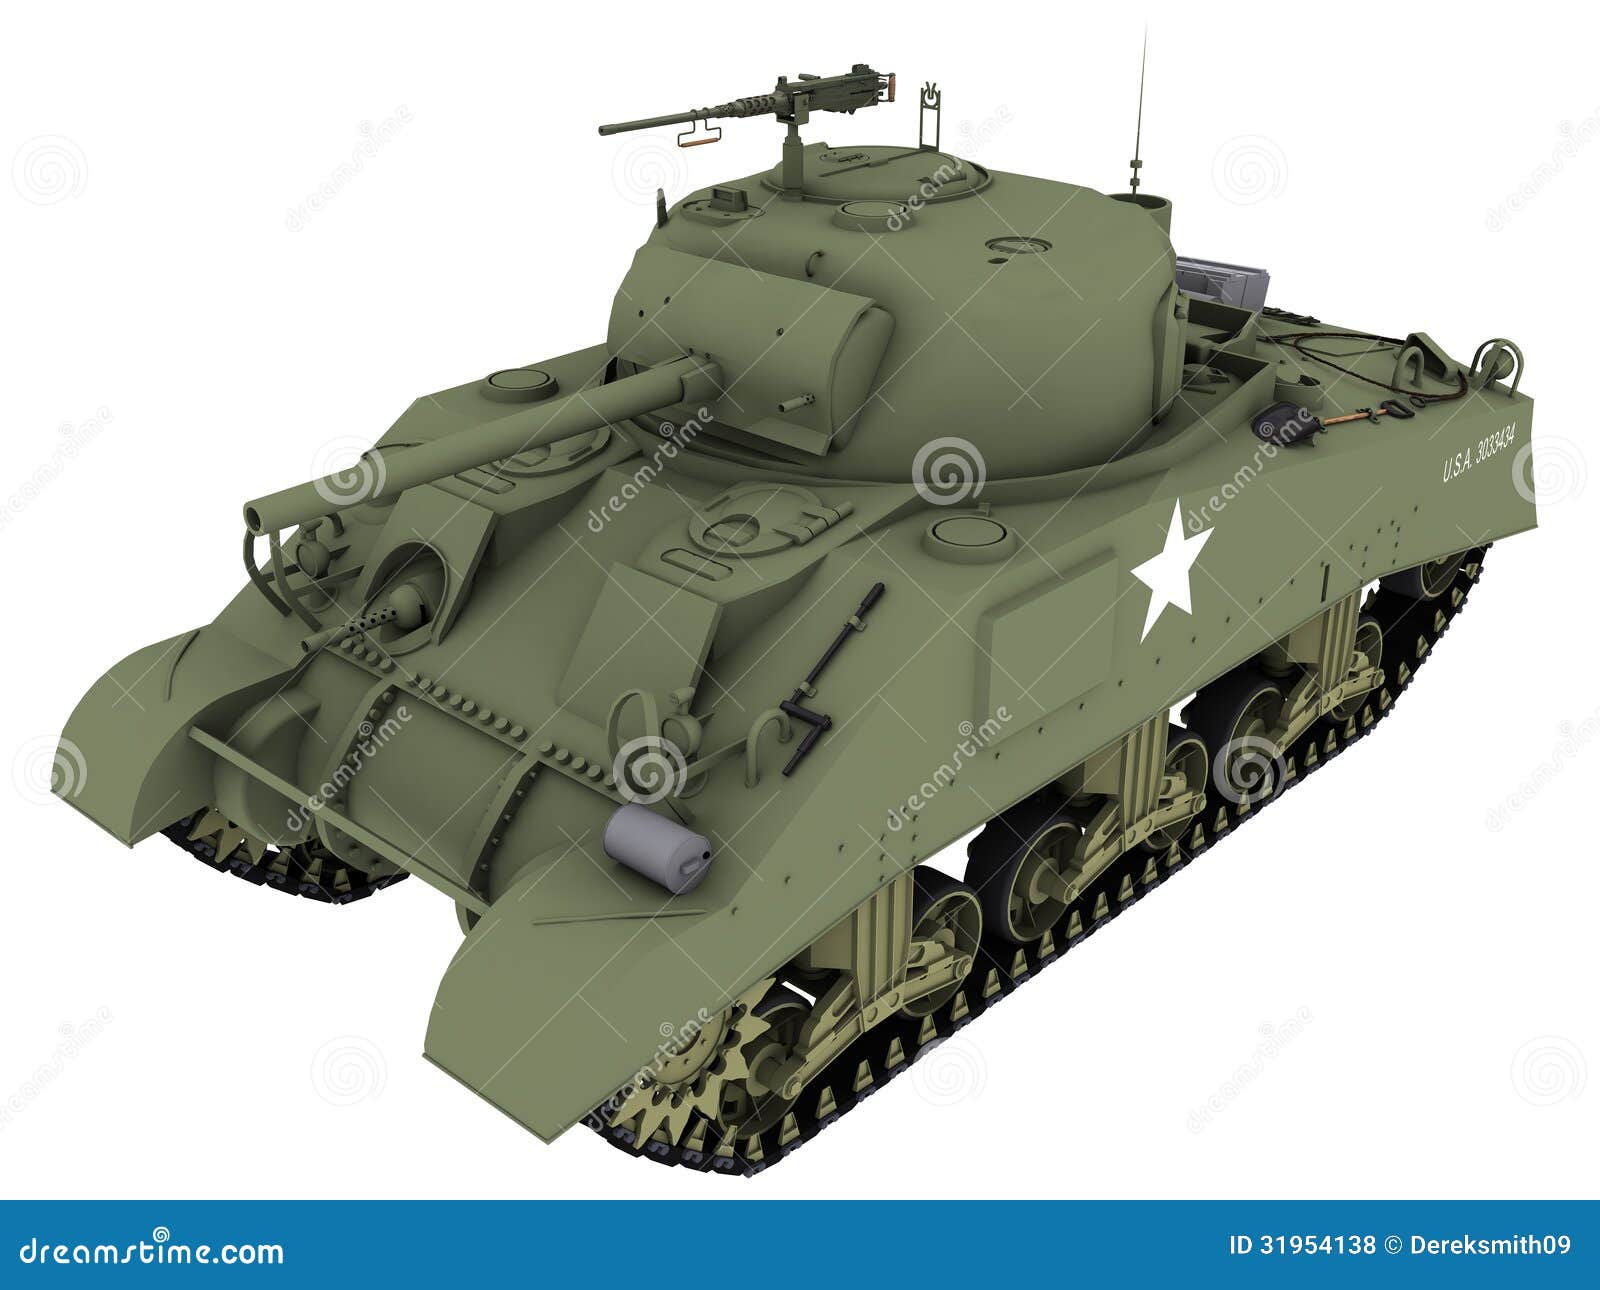 3d rendering of a m4a4 sherman tank